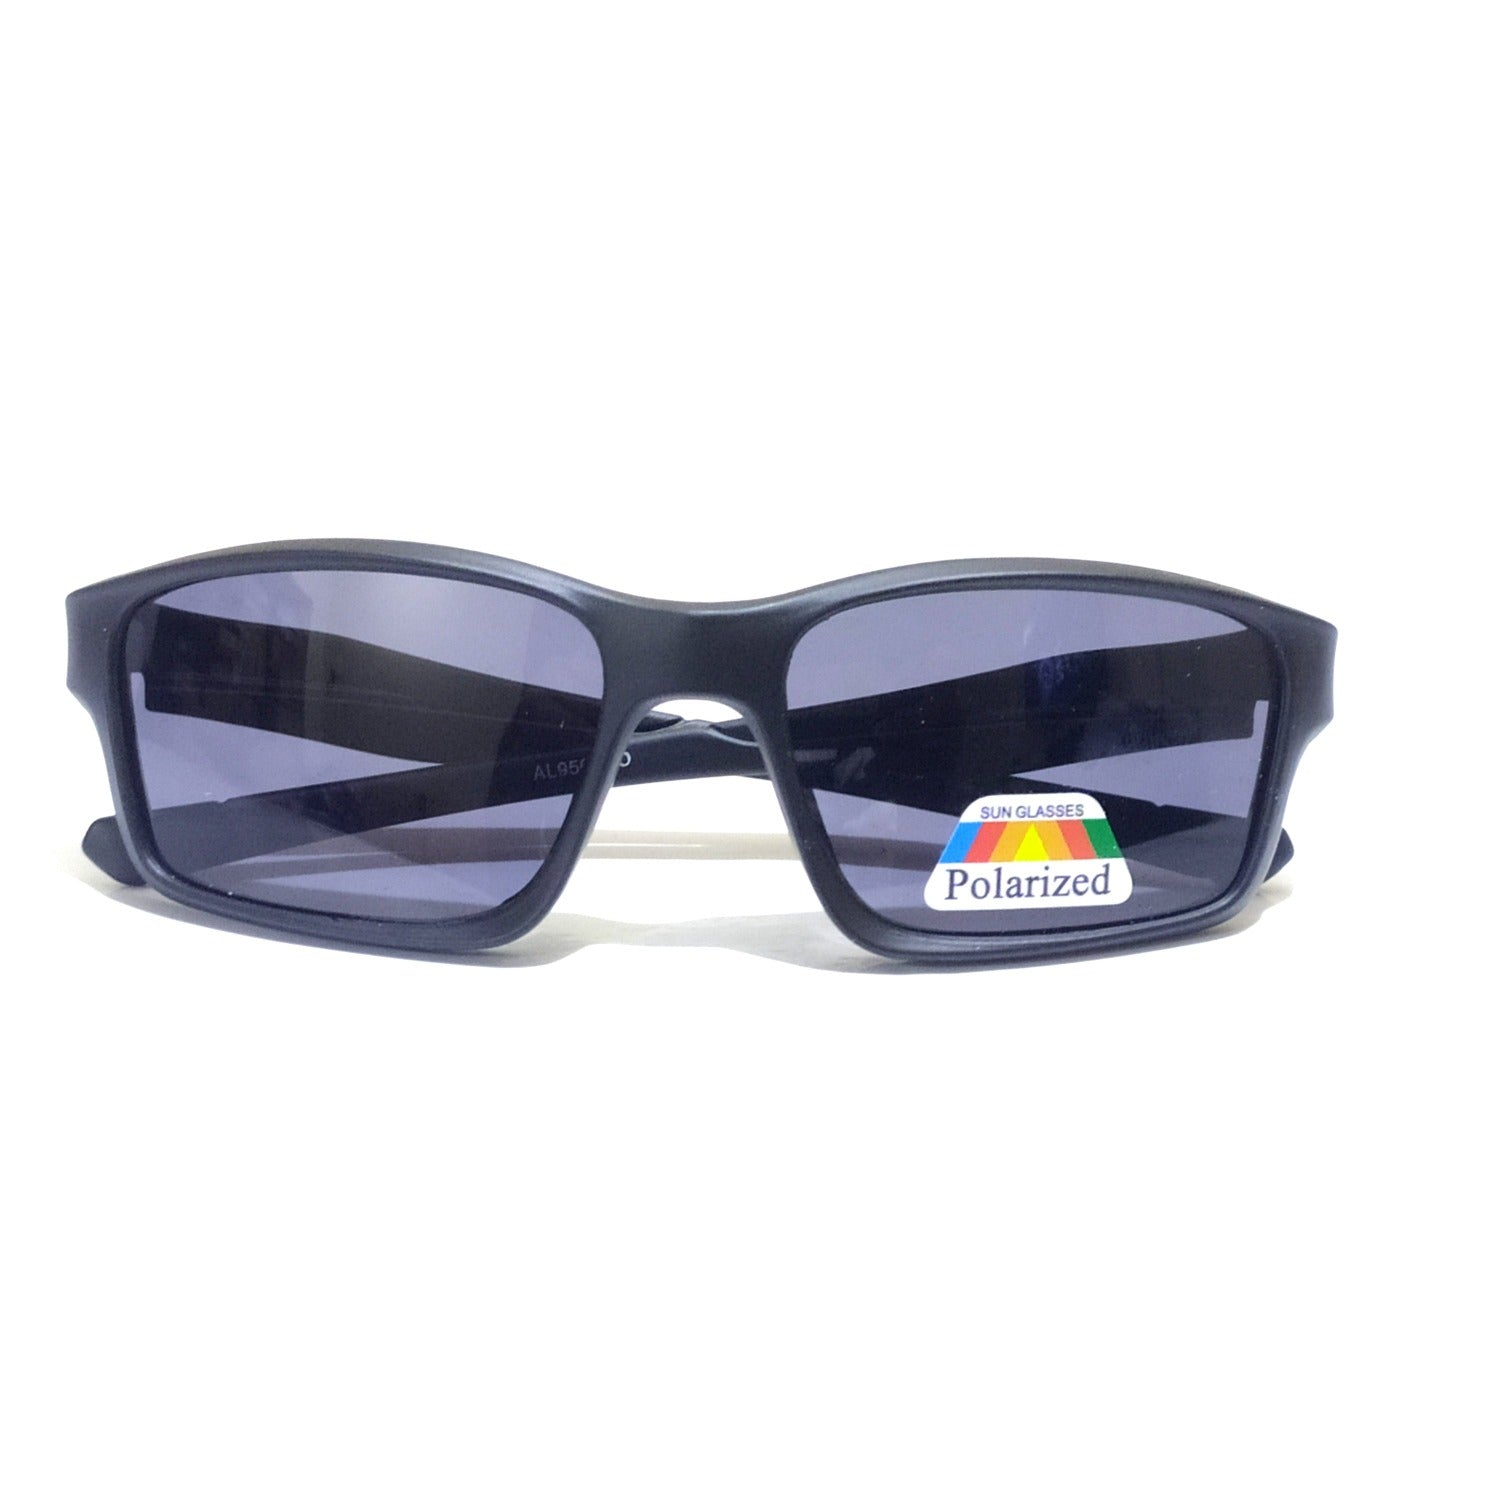 TOREGE Polarized Sports Sunglasses for Men Women Cycling Running Driving  Fishing | eBay